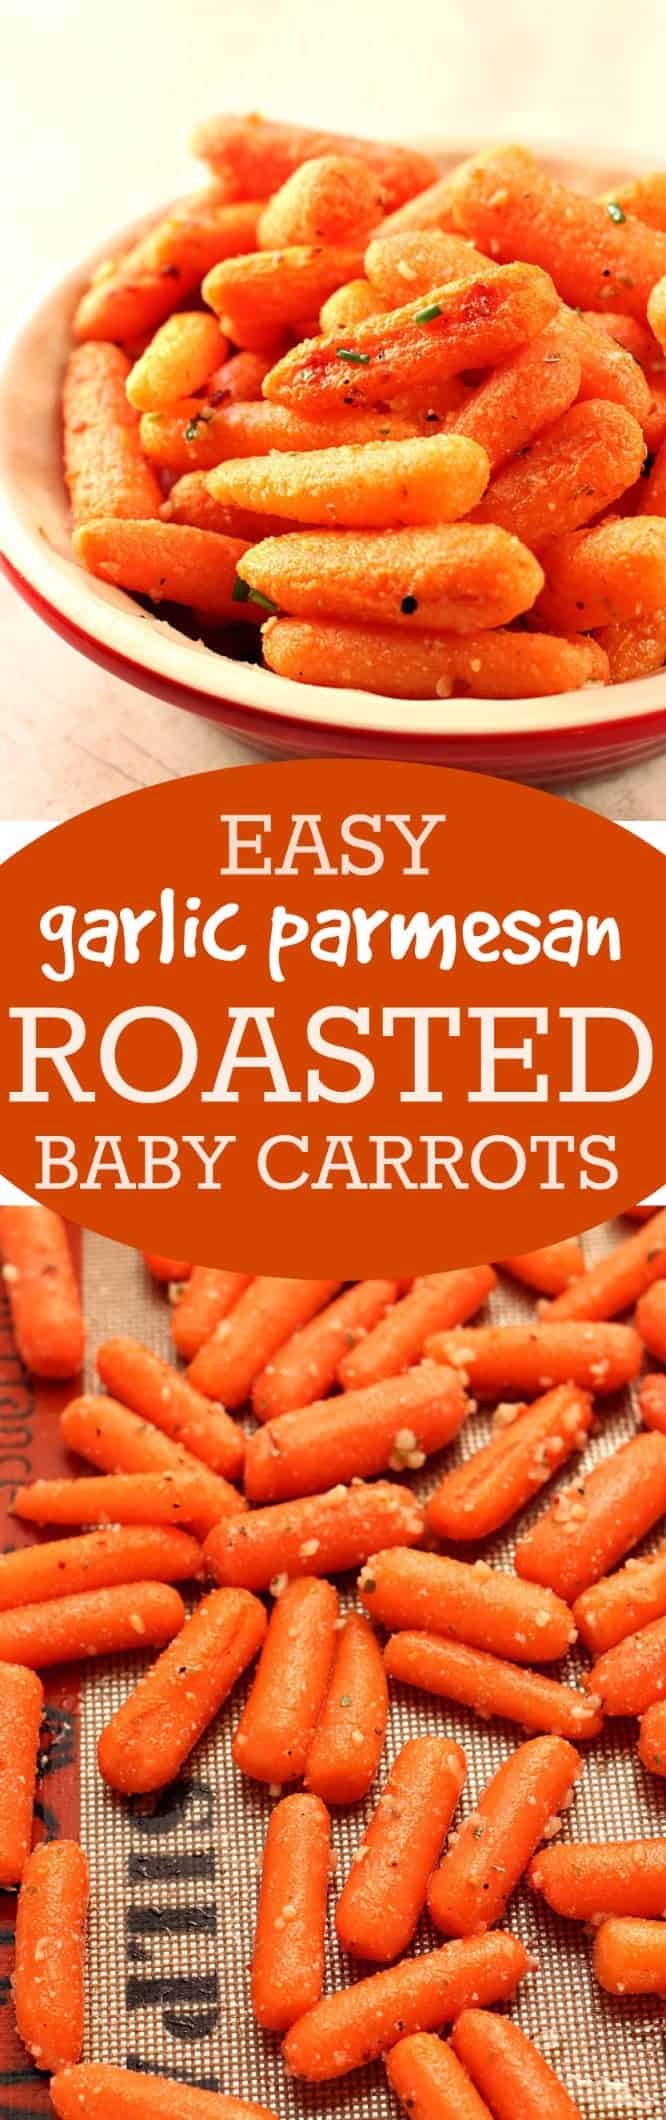 easy garlic parmesan roasted baby carrots long Easy Garlic Parmesan Roasted Baby Carrots